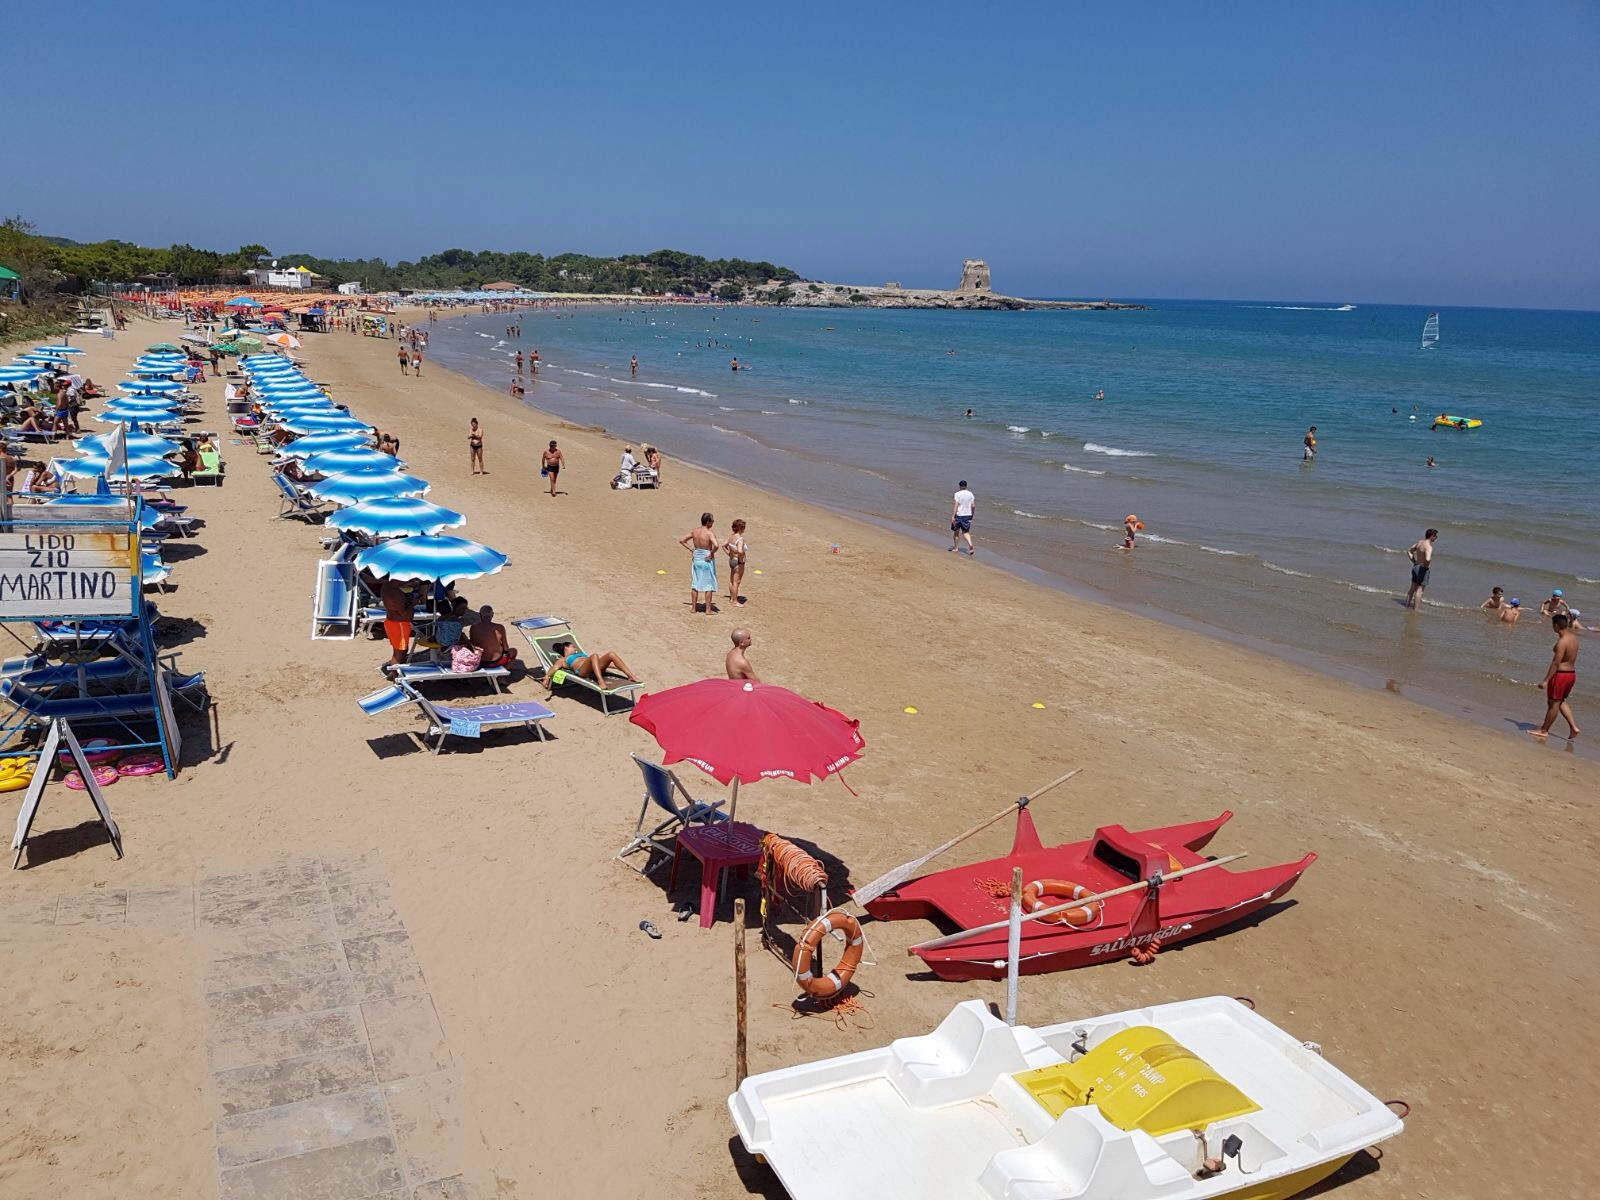 Photo of Spiaggia di Sfinale with brown fine sand surface